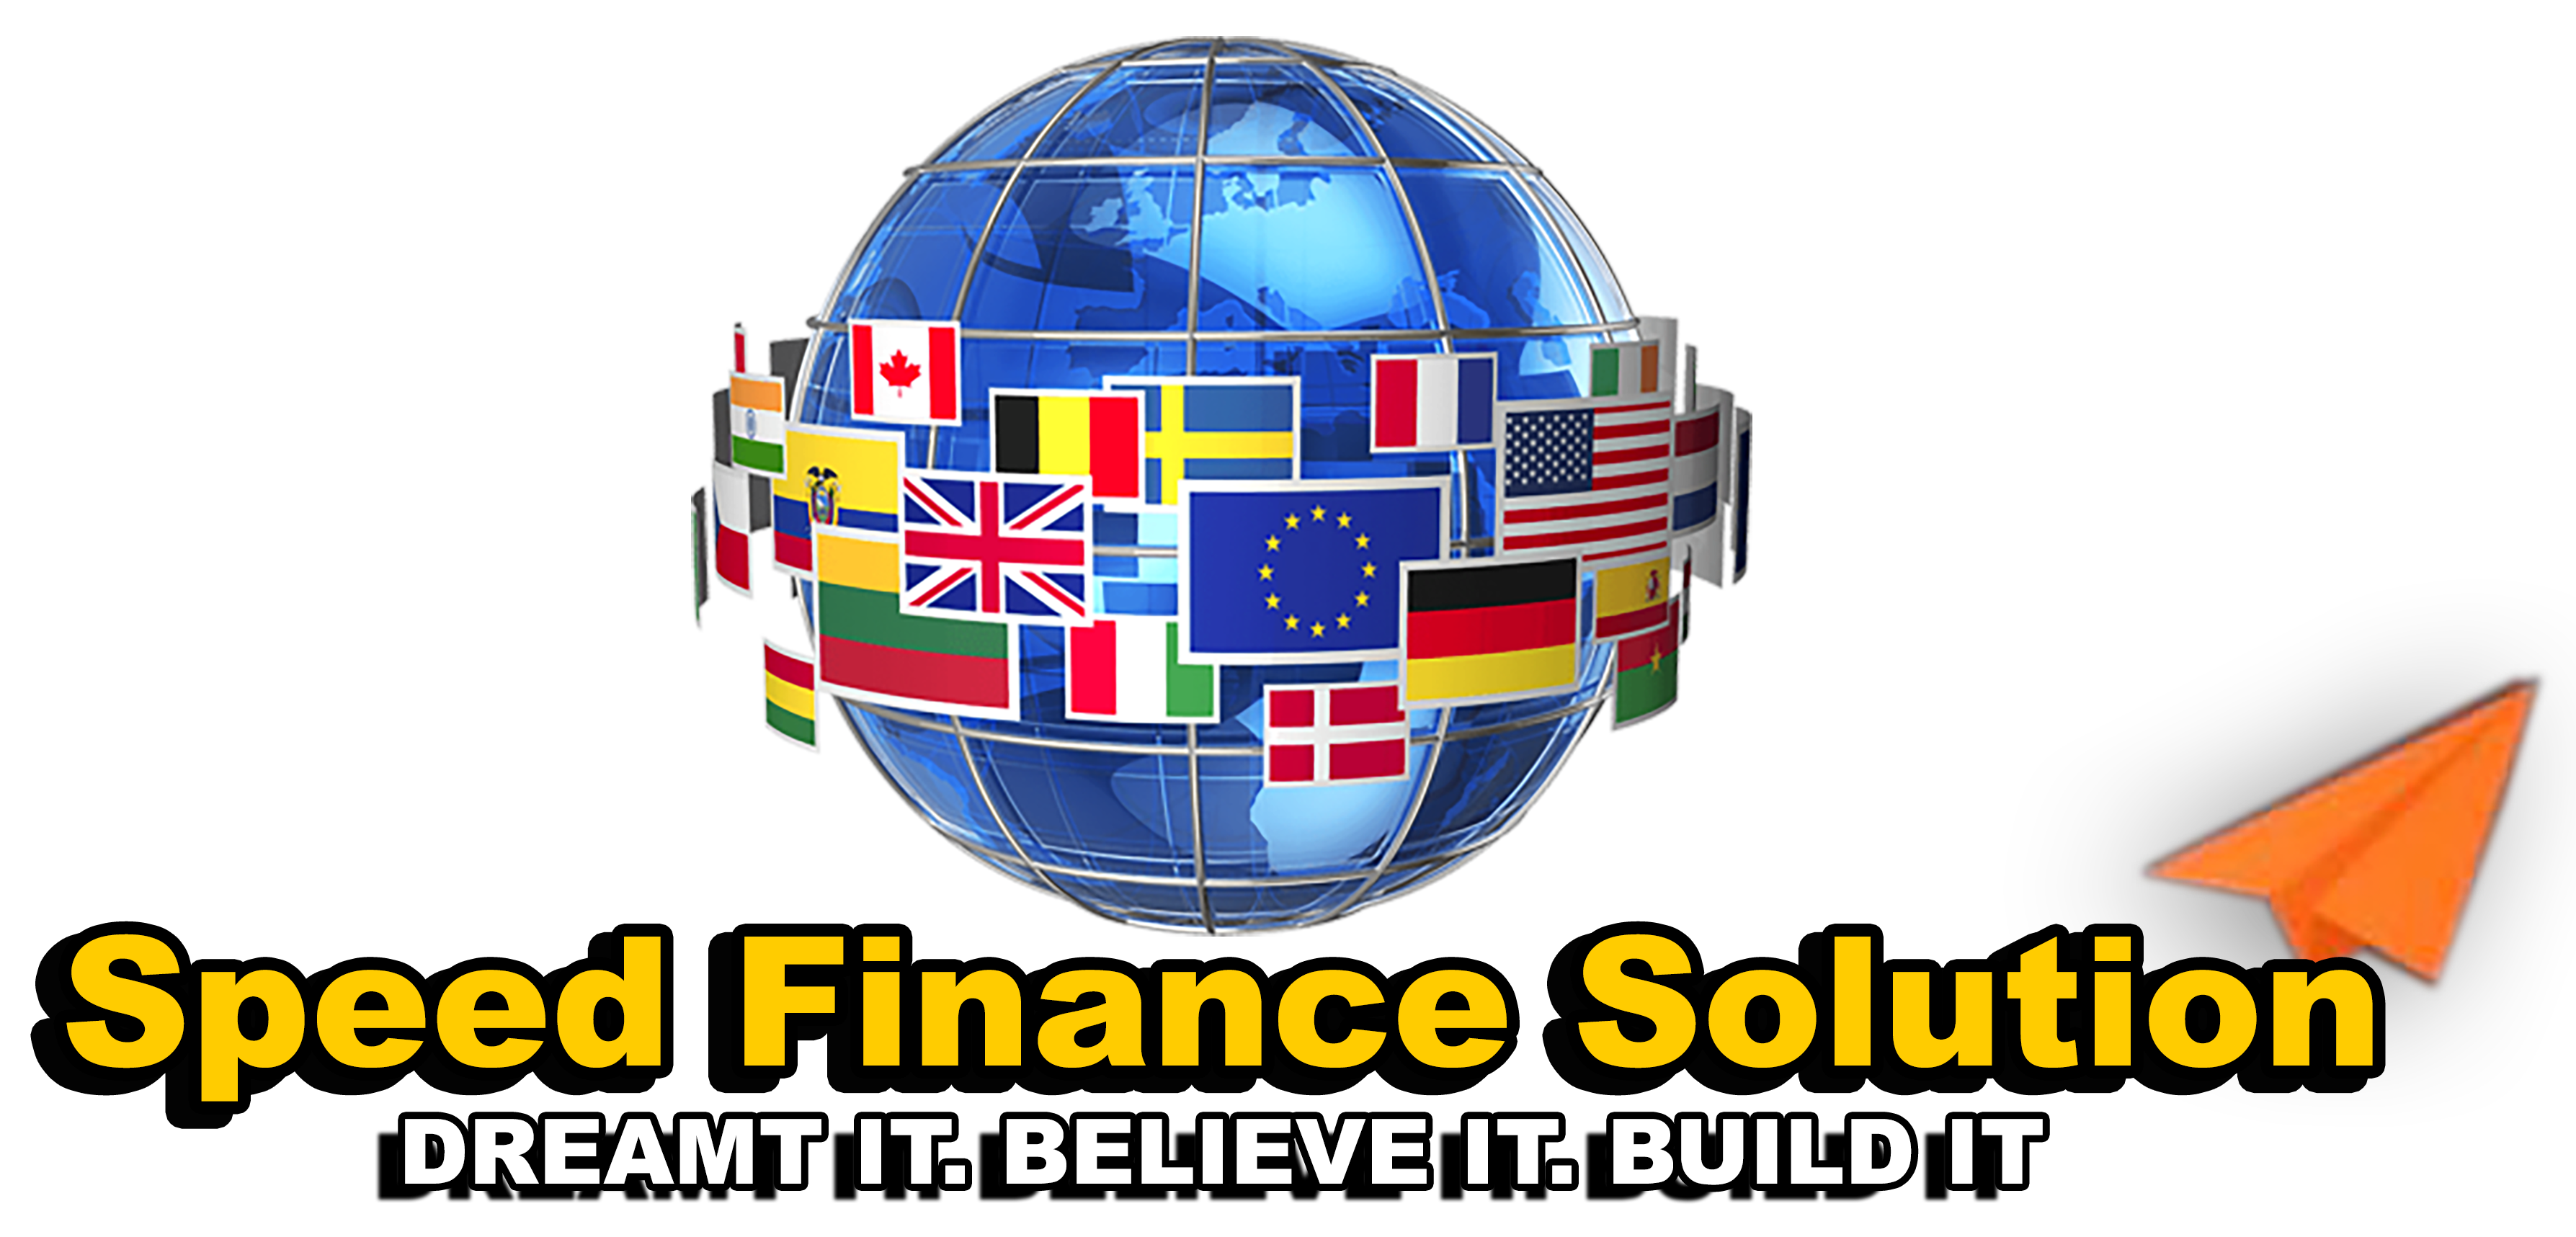 Speed Finance Solution Full Business Plan